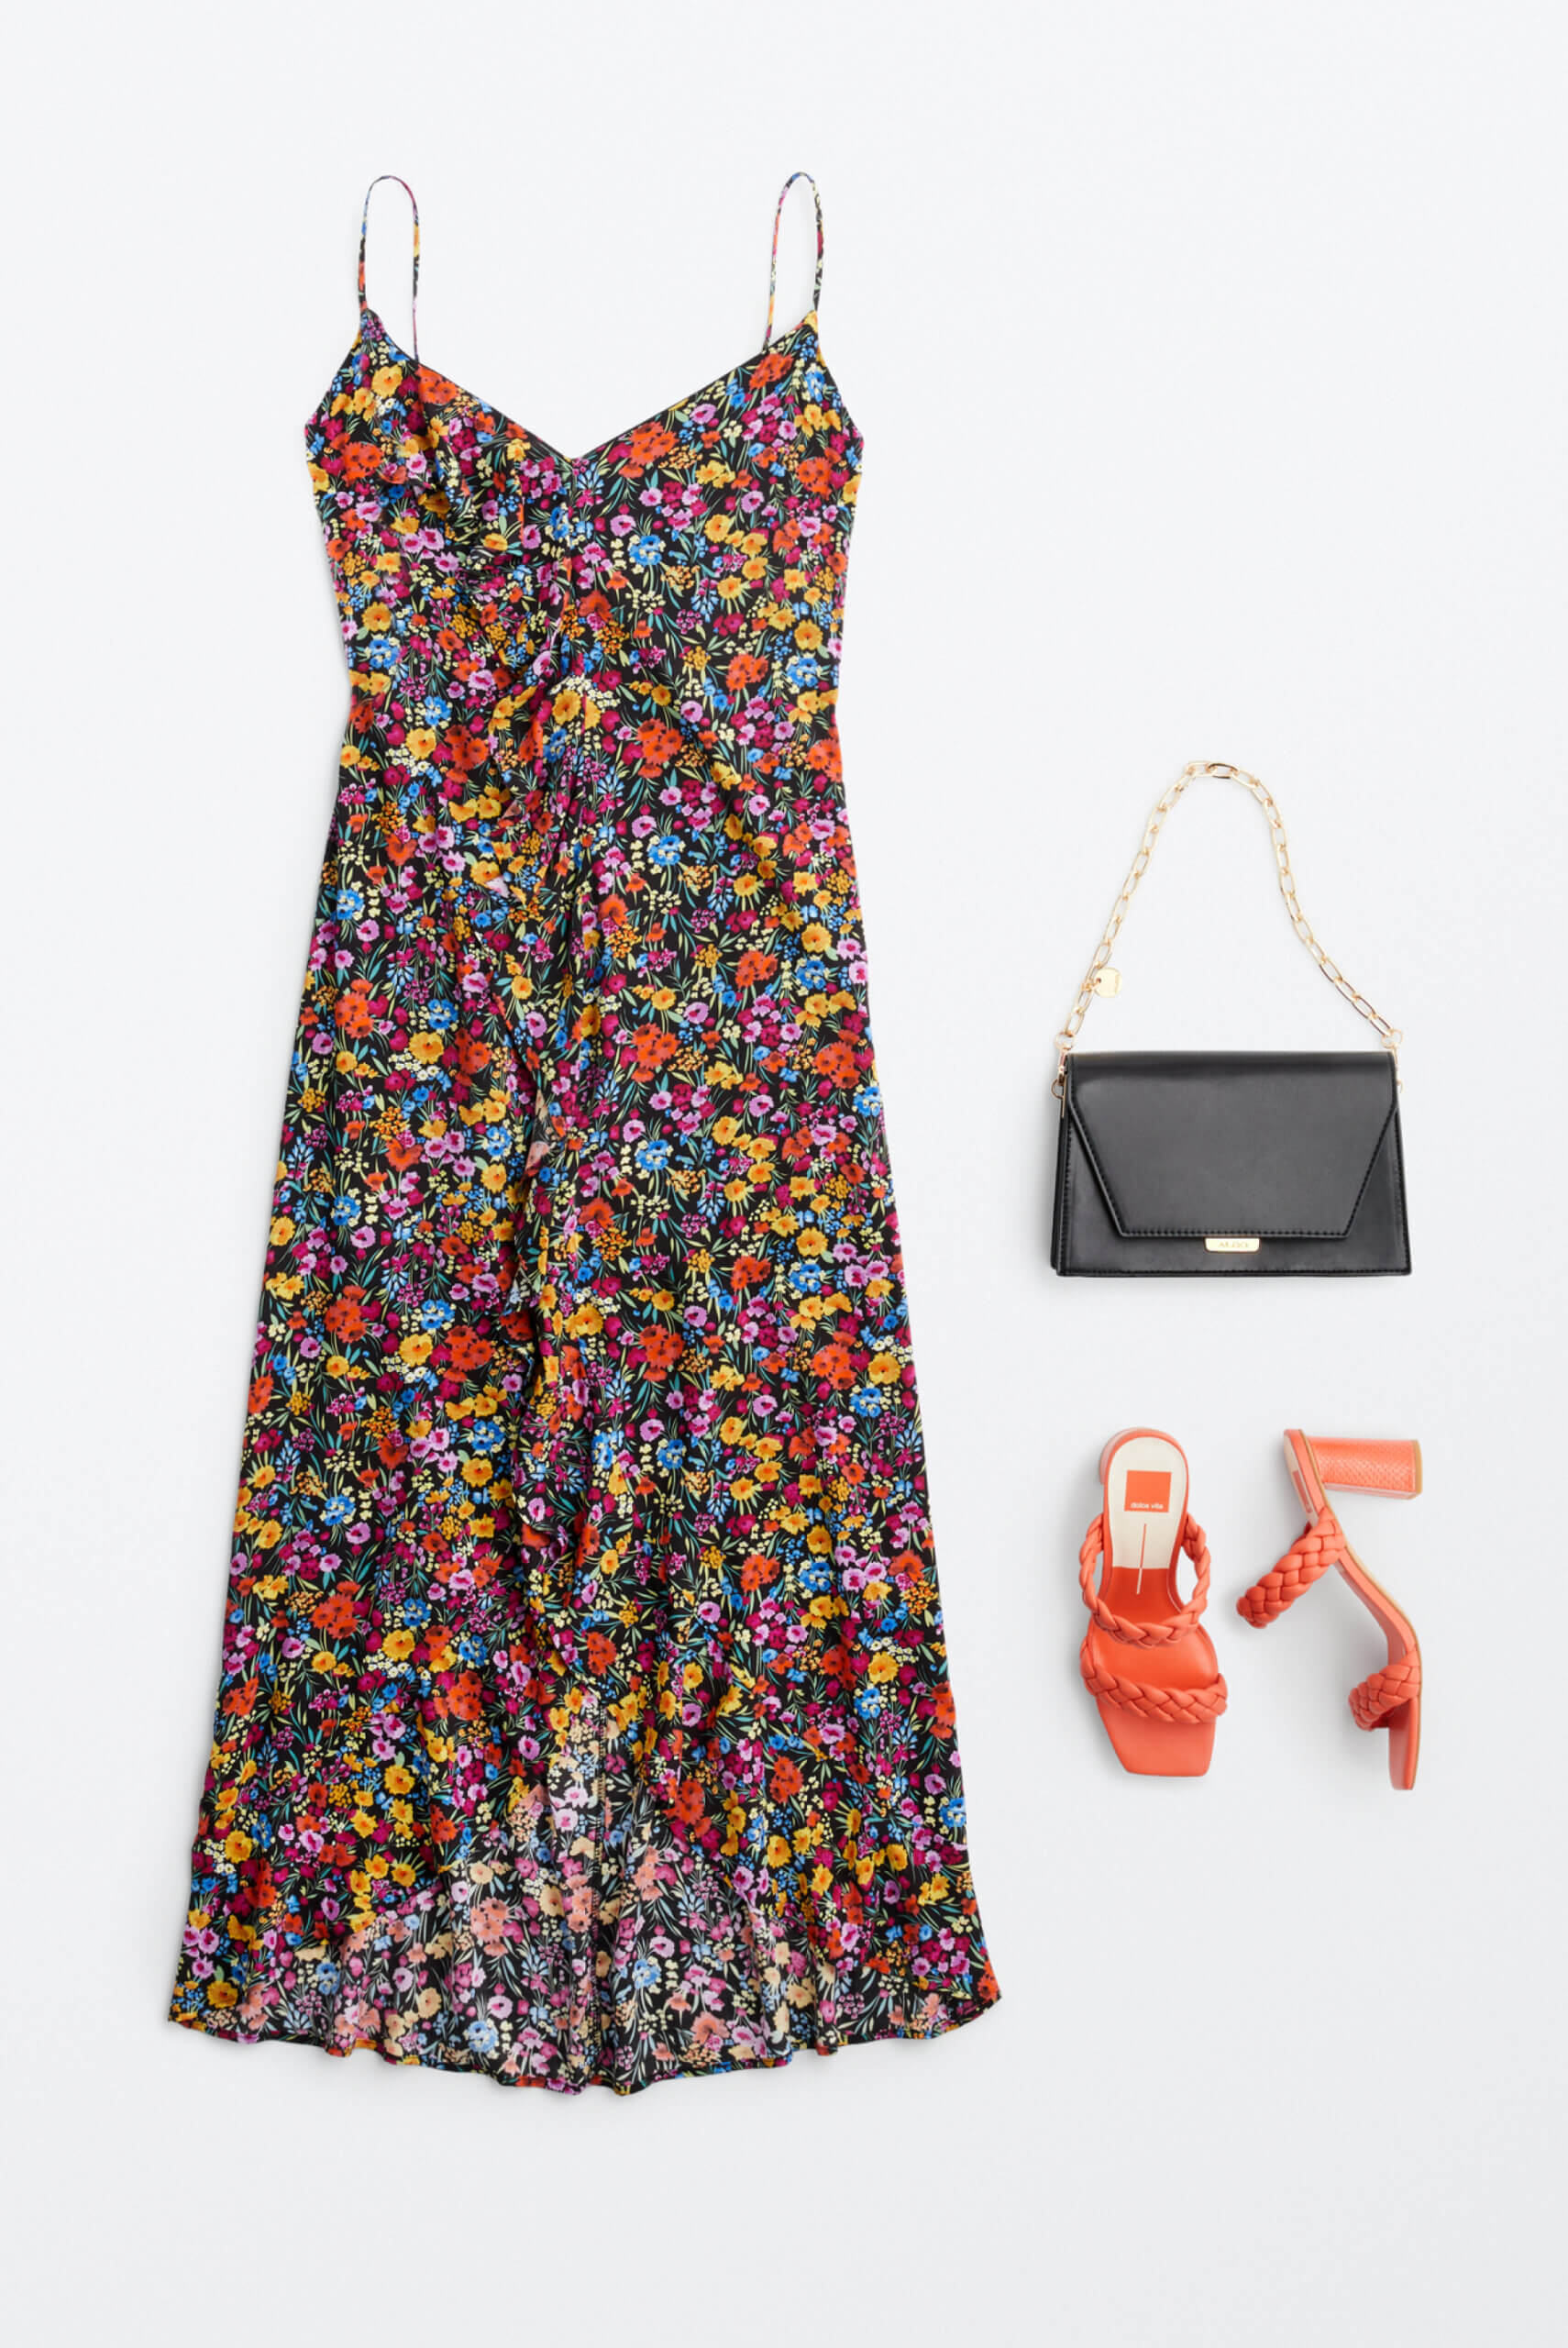 Alt text: A long floral slip dress, a black clutch purse and orange heels arranged together for outfit inspiration. 